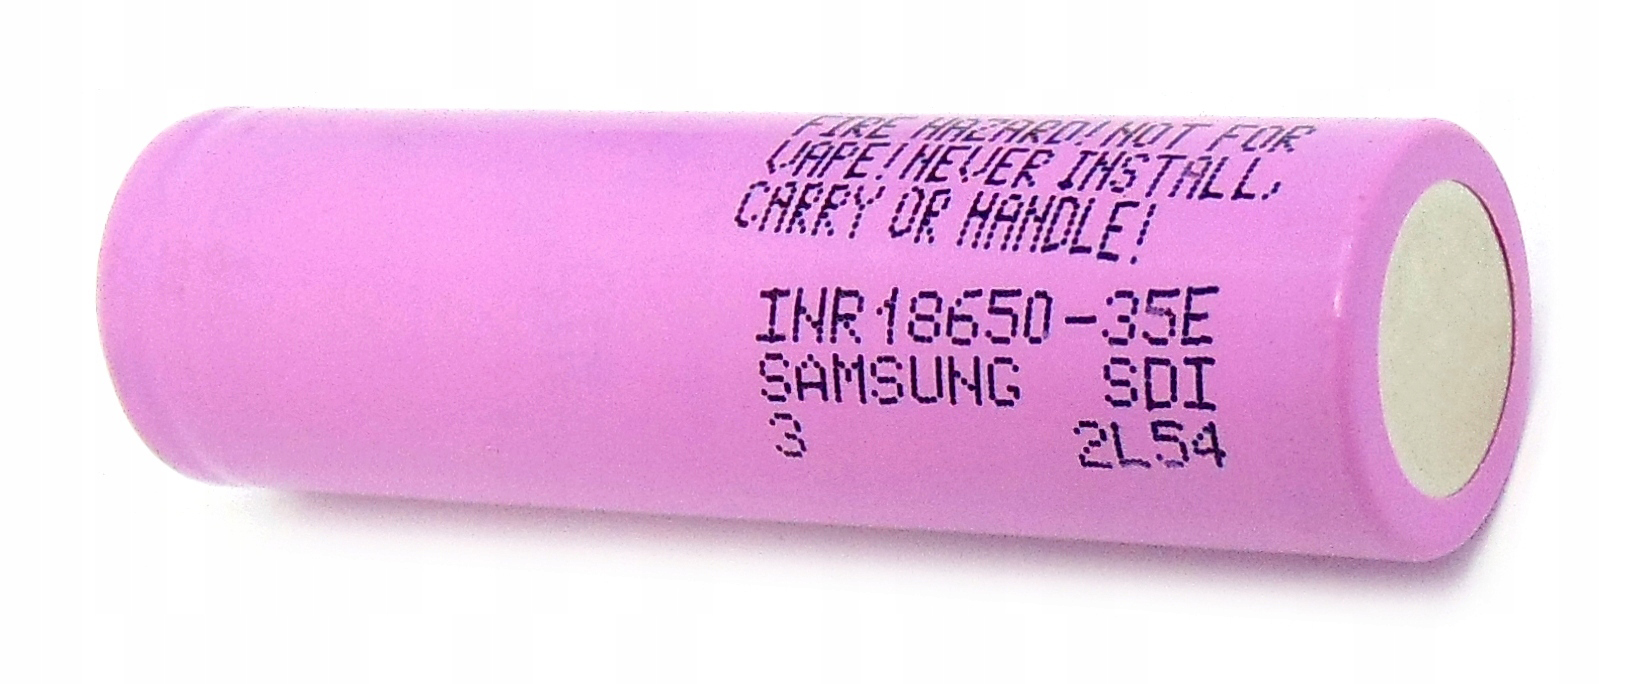 Akumulator Li-ion Samsung INR18650-35E 3500mAh 10A - Sklep, Opinie, Cena w